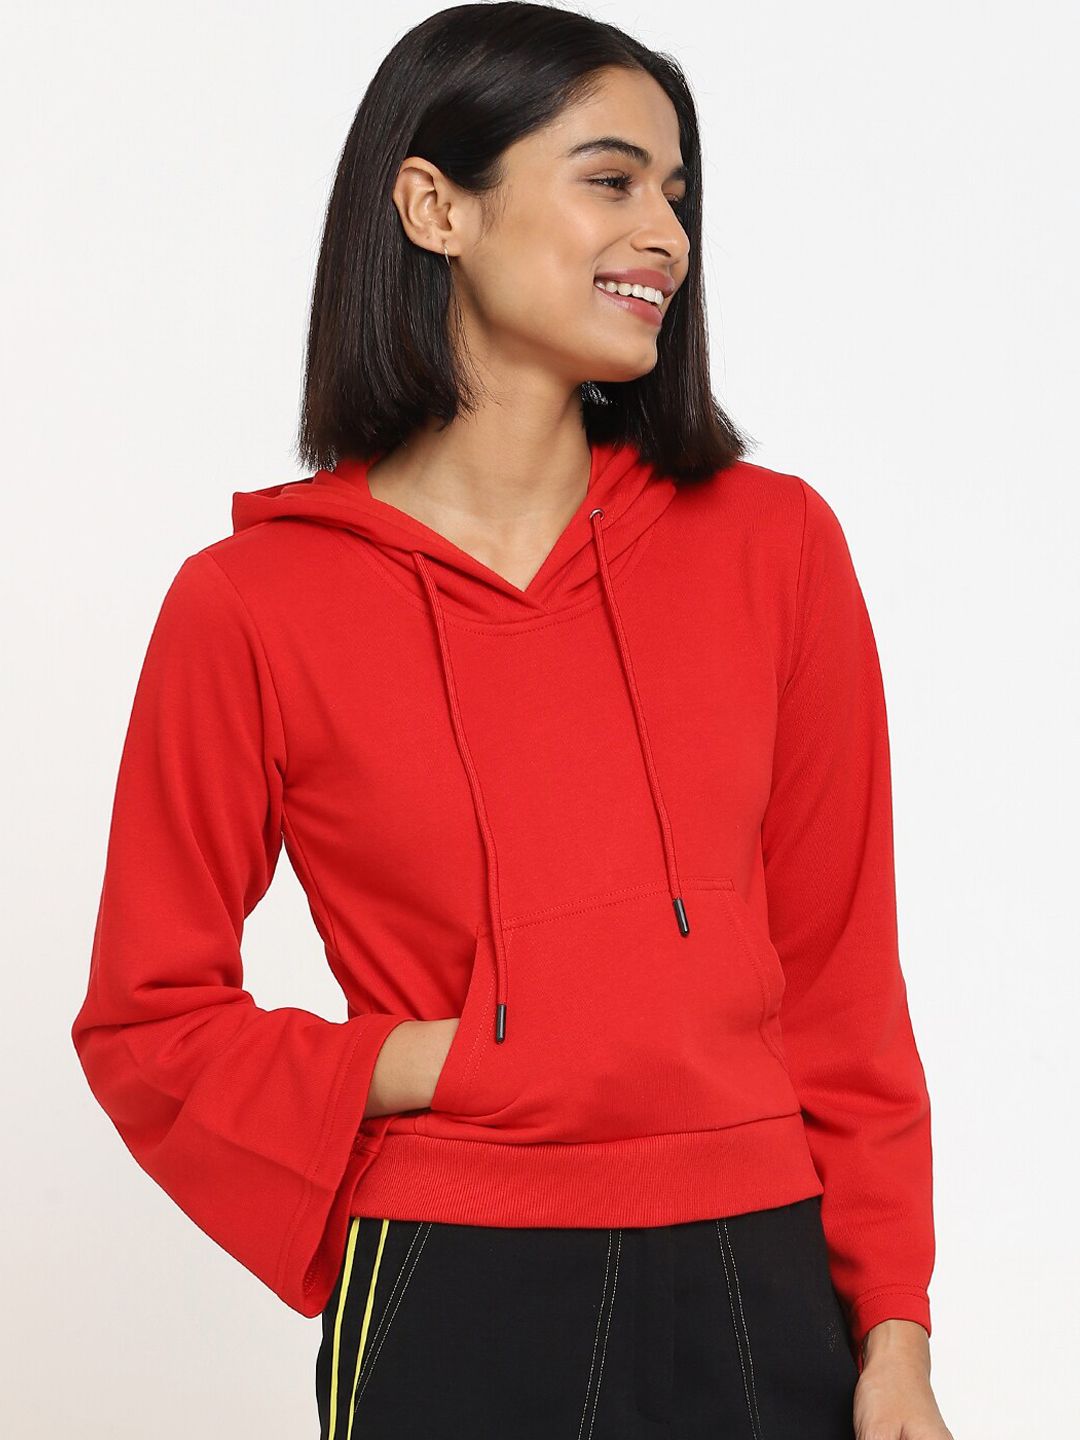 Bewakoof Women Red Hooded Sweatshirt Price in India